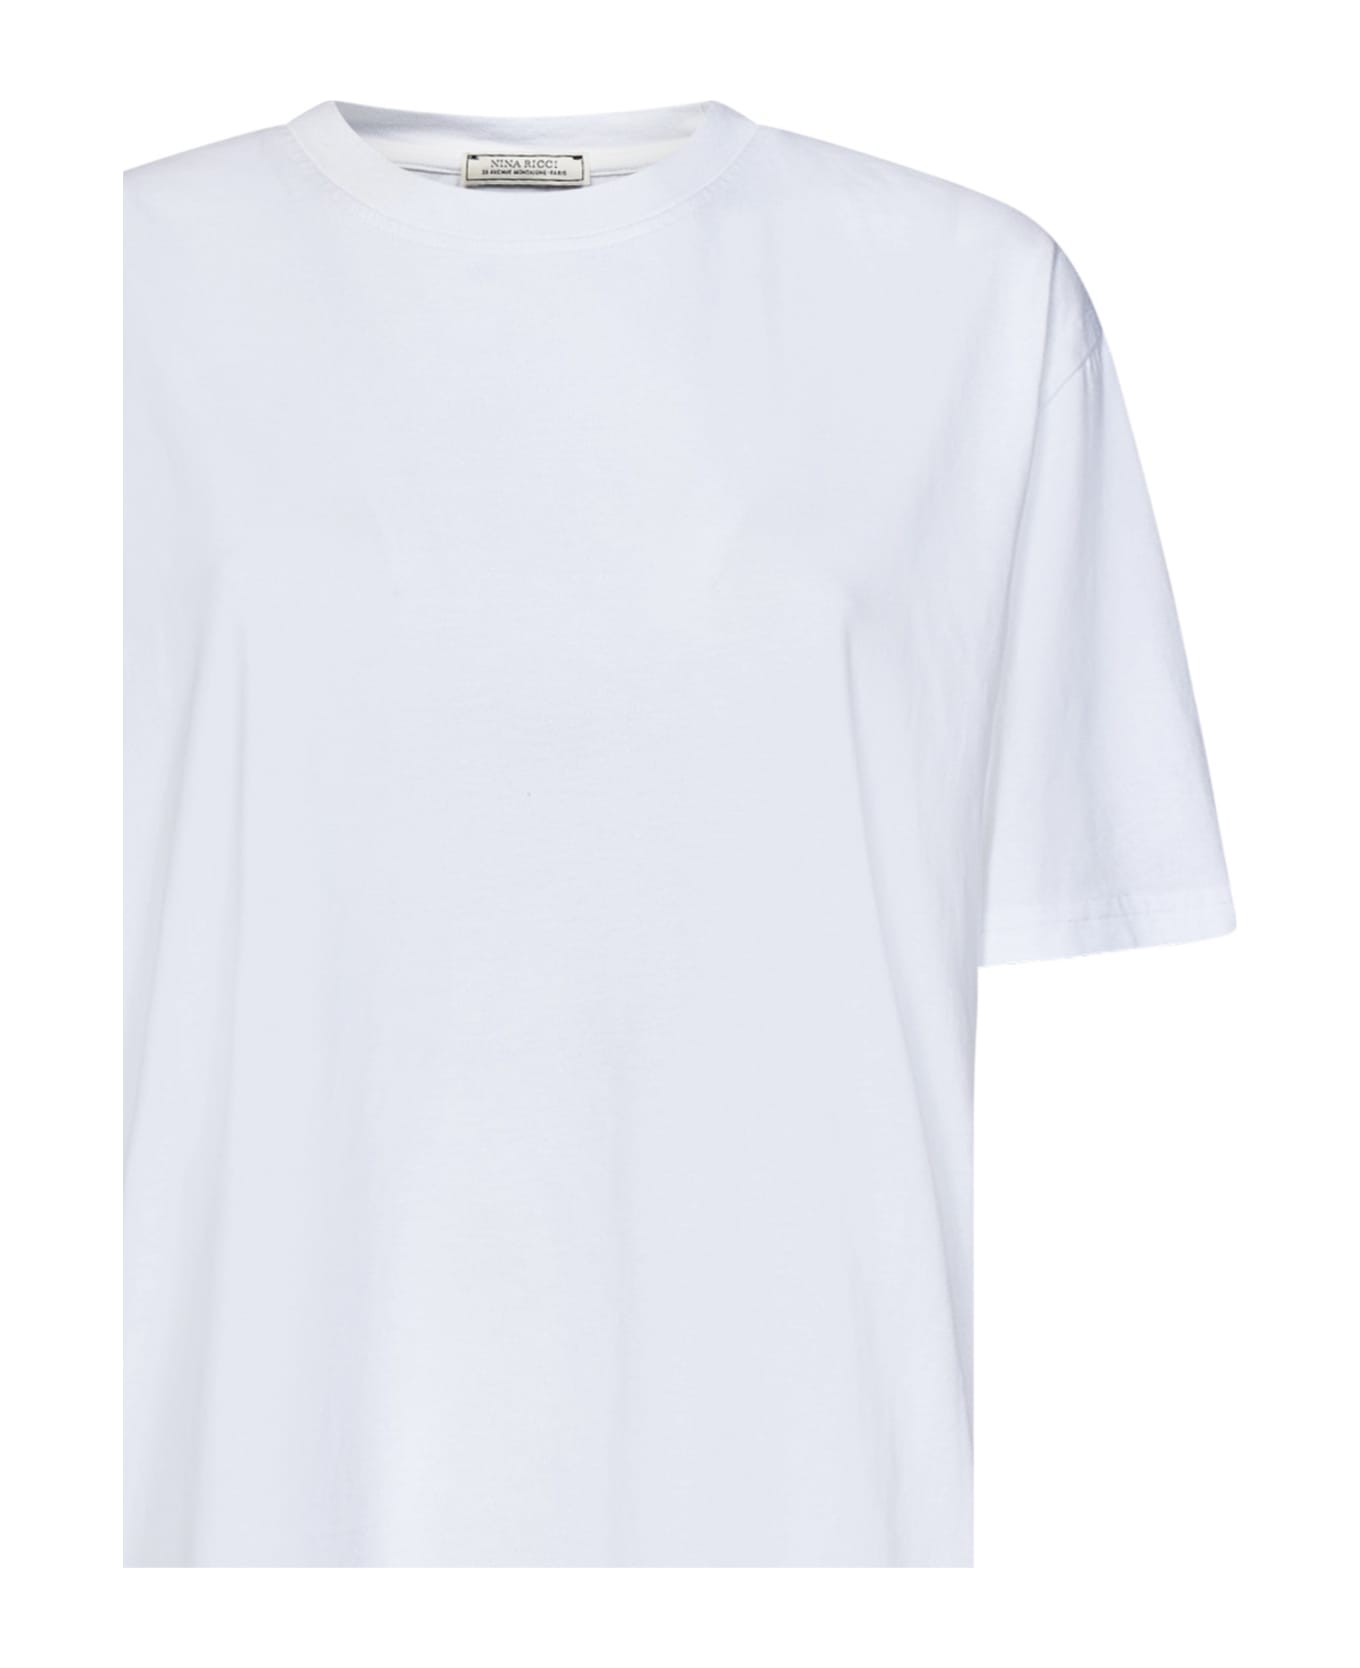 Nina Ricci T-shirt - White